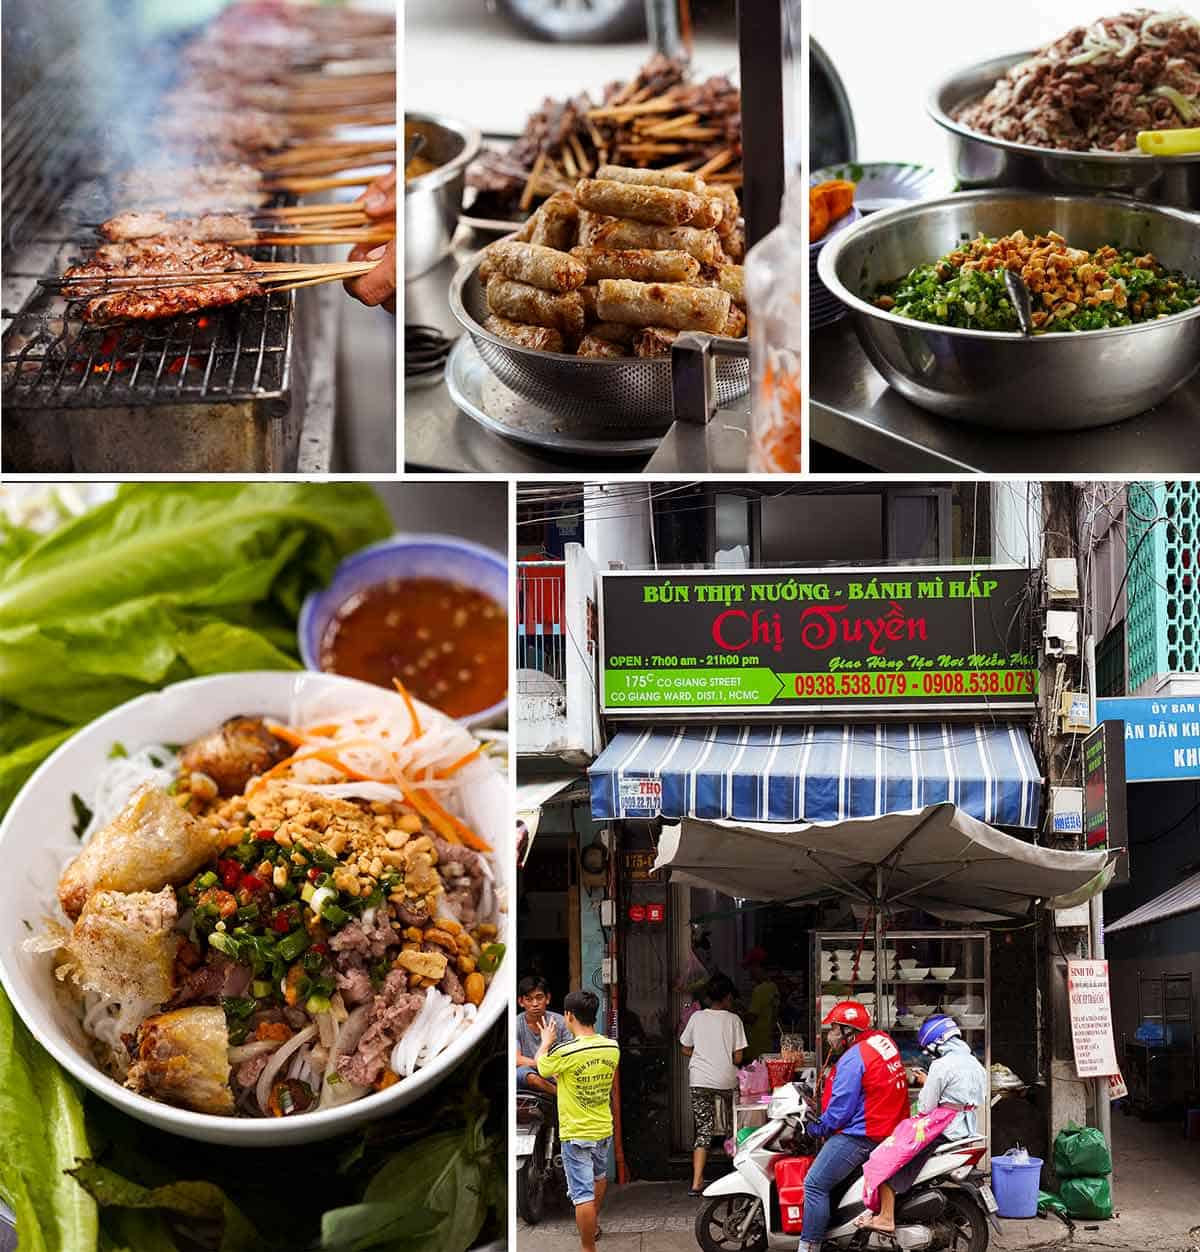 Best place to have Vietnamese Lemongrass Pork Noodle Bowls in Saigon (Bun Thit Nuong) - Bun Thit Nuong Chi Tuyen